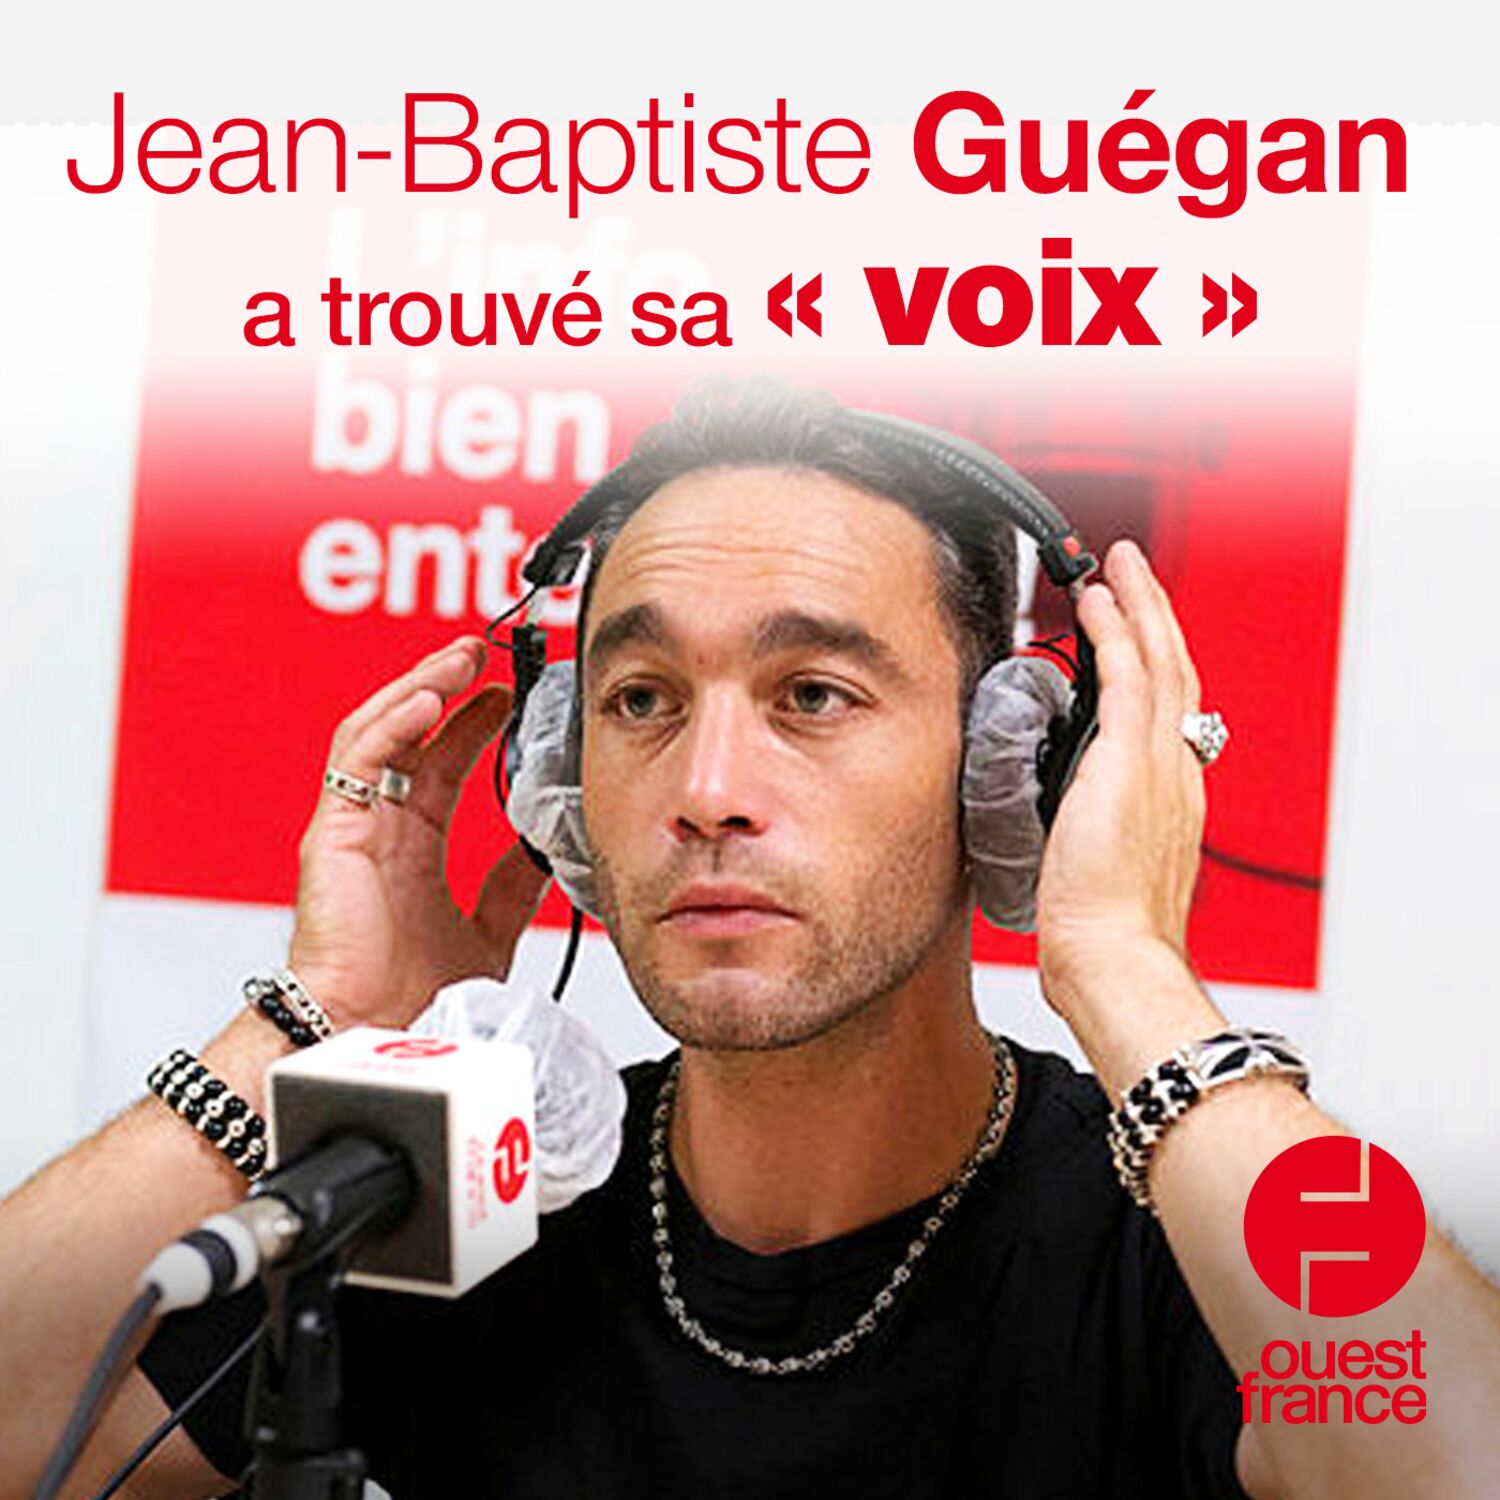 Jean-Baptiste Guégan a trouvé sa ”voix”